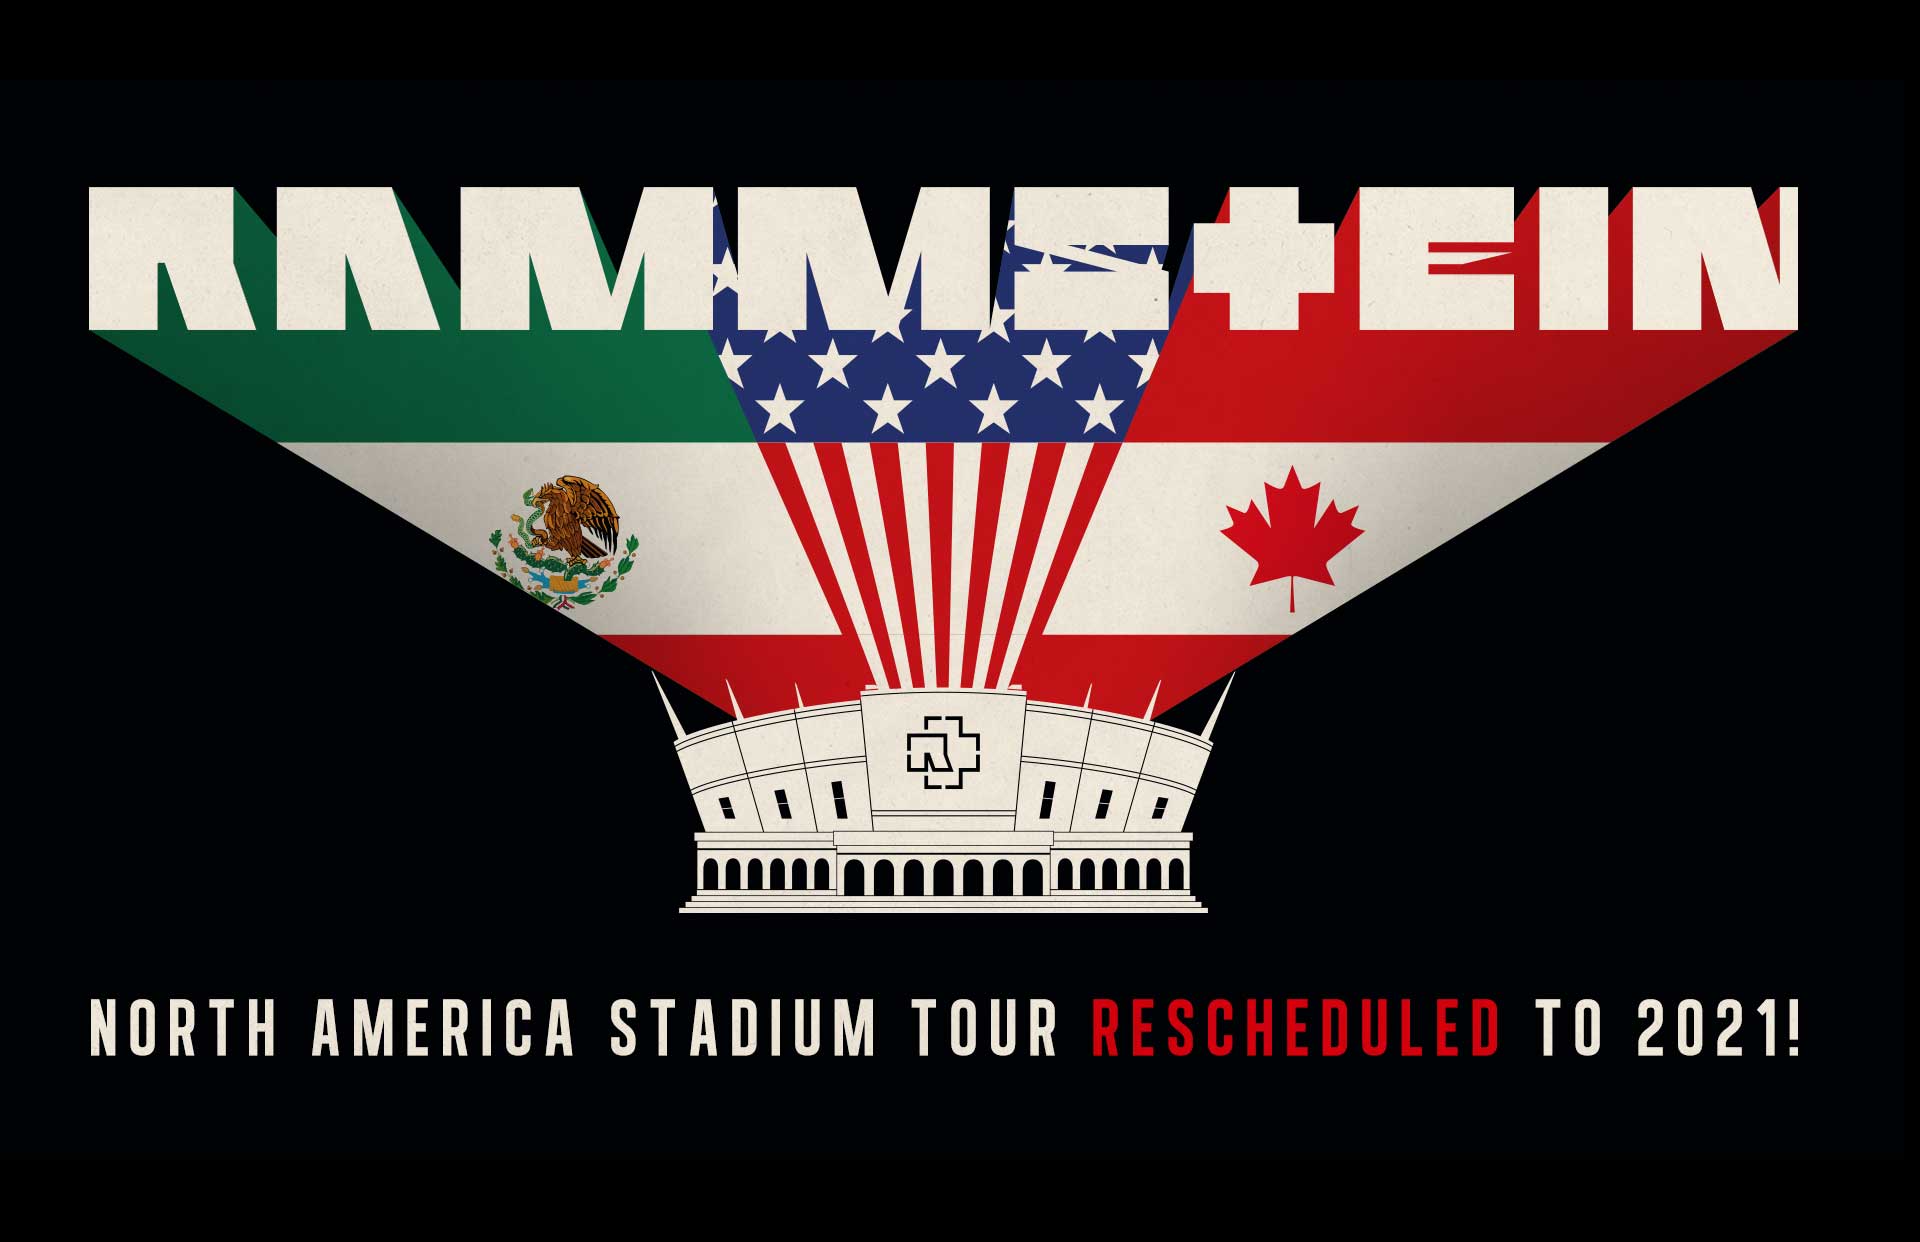 Rammstein America tour 2021